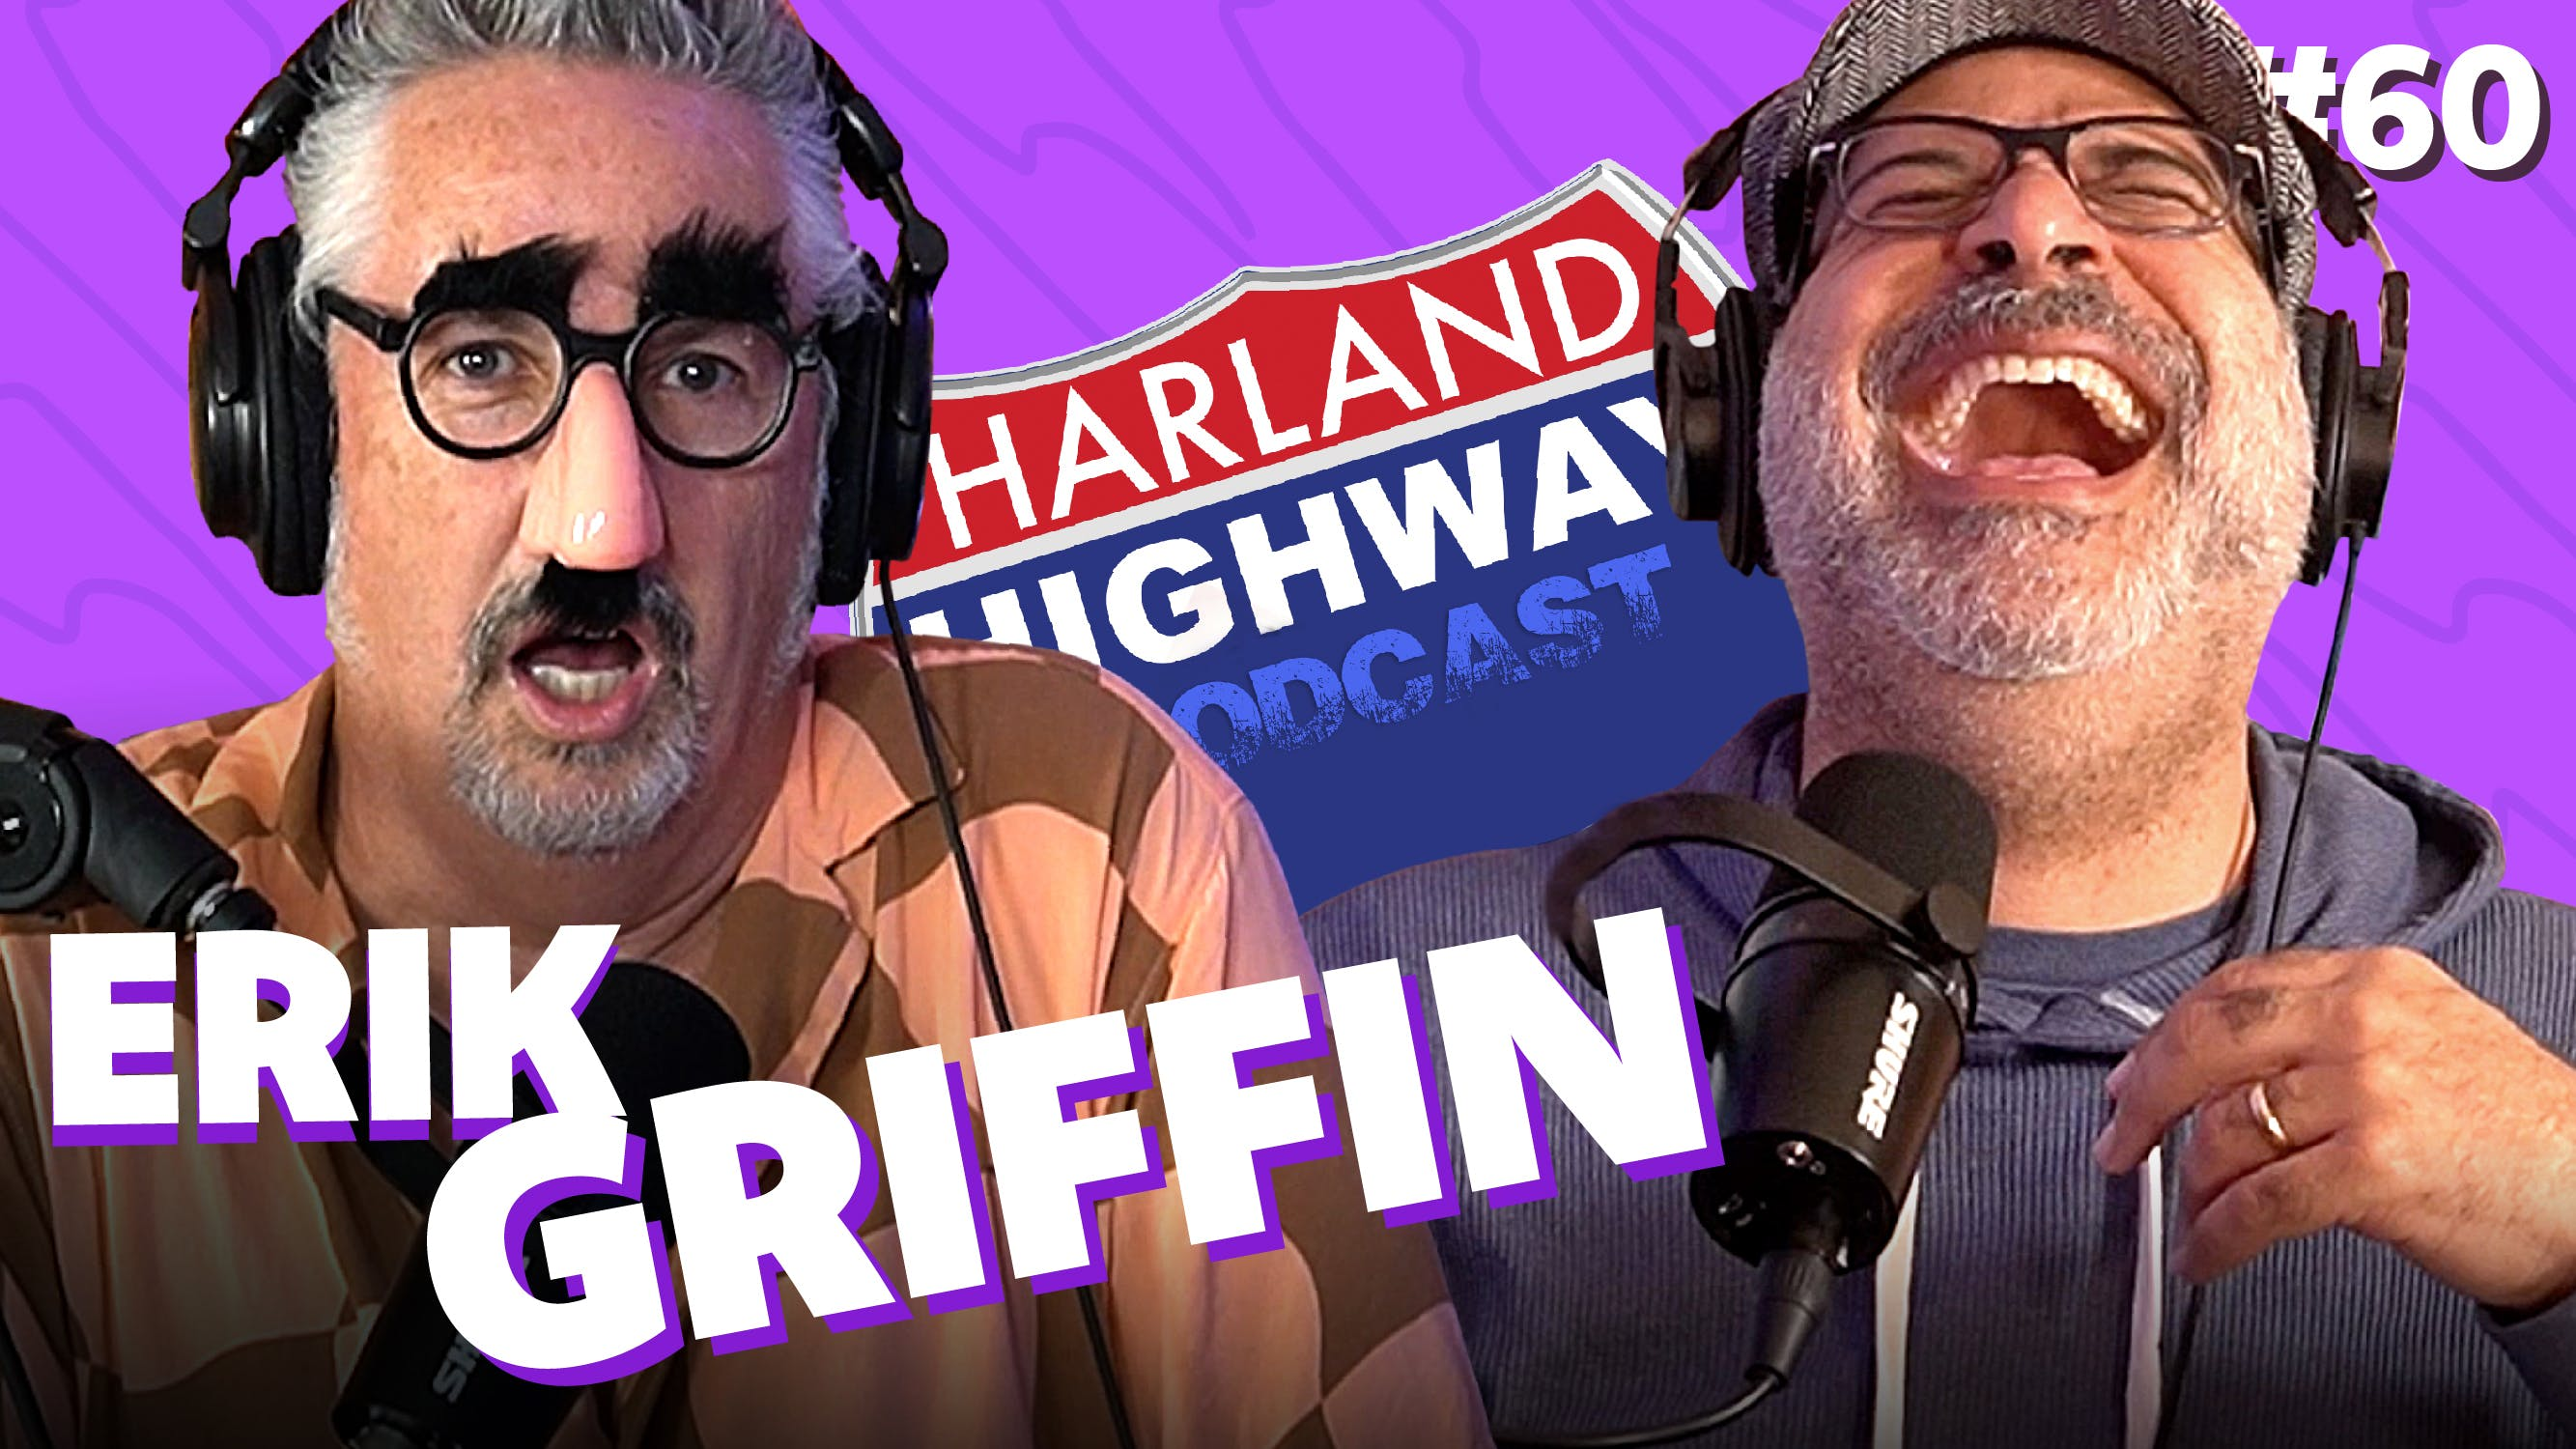 NEW HARLAND HIGHWAY #60 - ERIK GRIFFIN, Comedian, Podcaster, Actor.